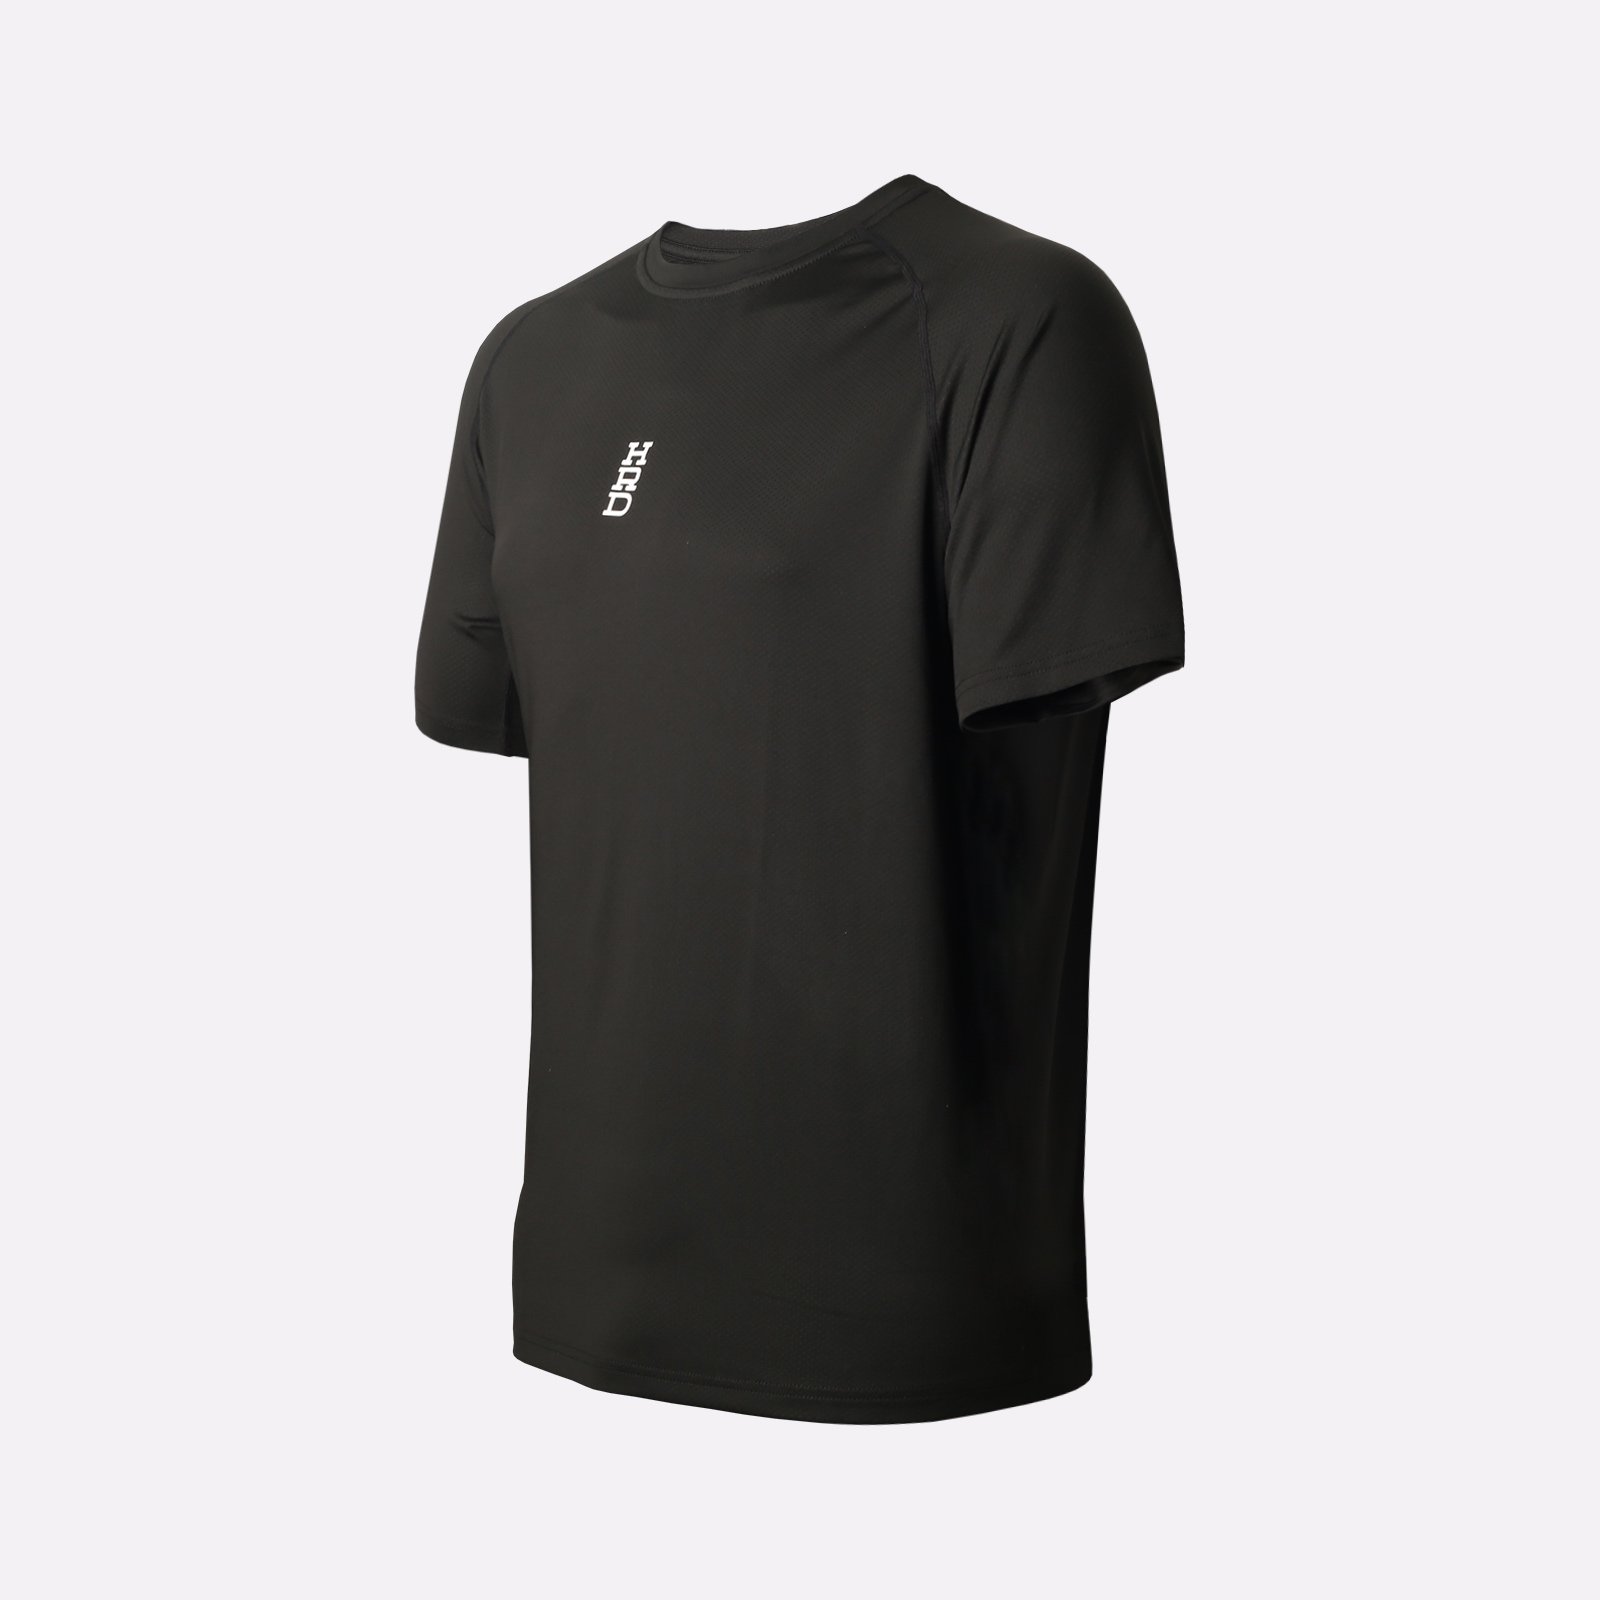 мужская черная футболка Hard TR03 HR-TR03-black - цена, описание, фото 1